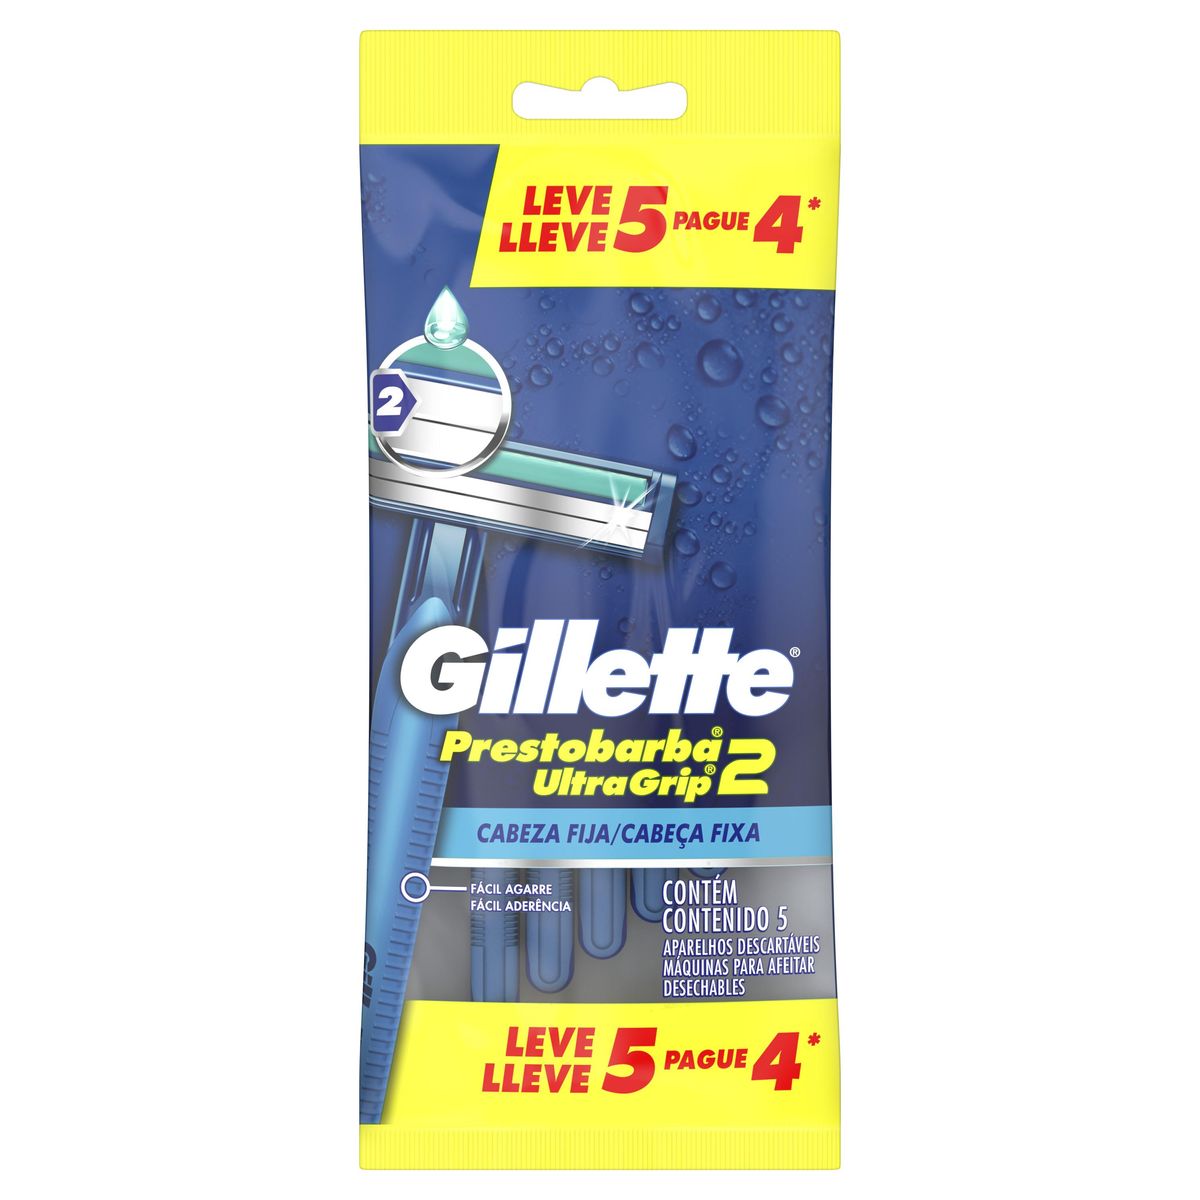 Aparelho de Barbear Descartável Gillette Prestobarba UltraGrip2 Leve 5 Pague 4